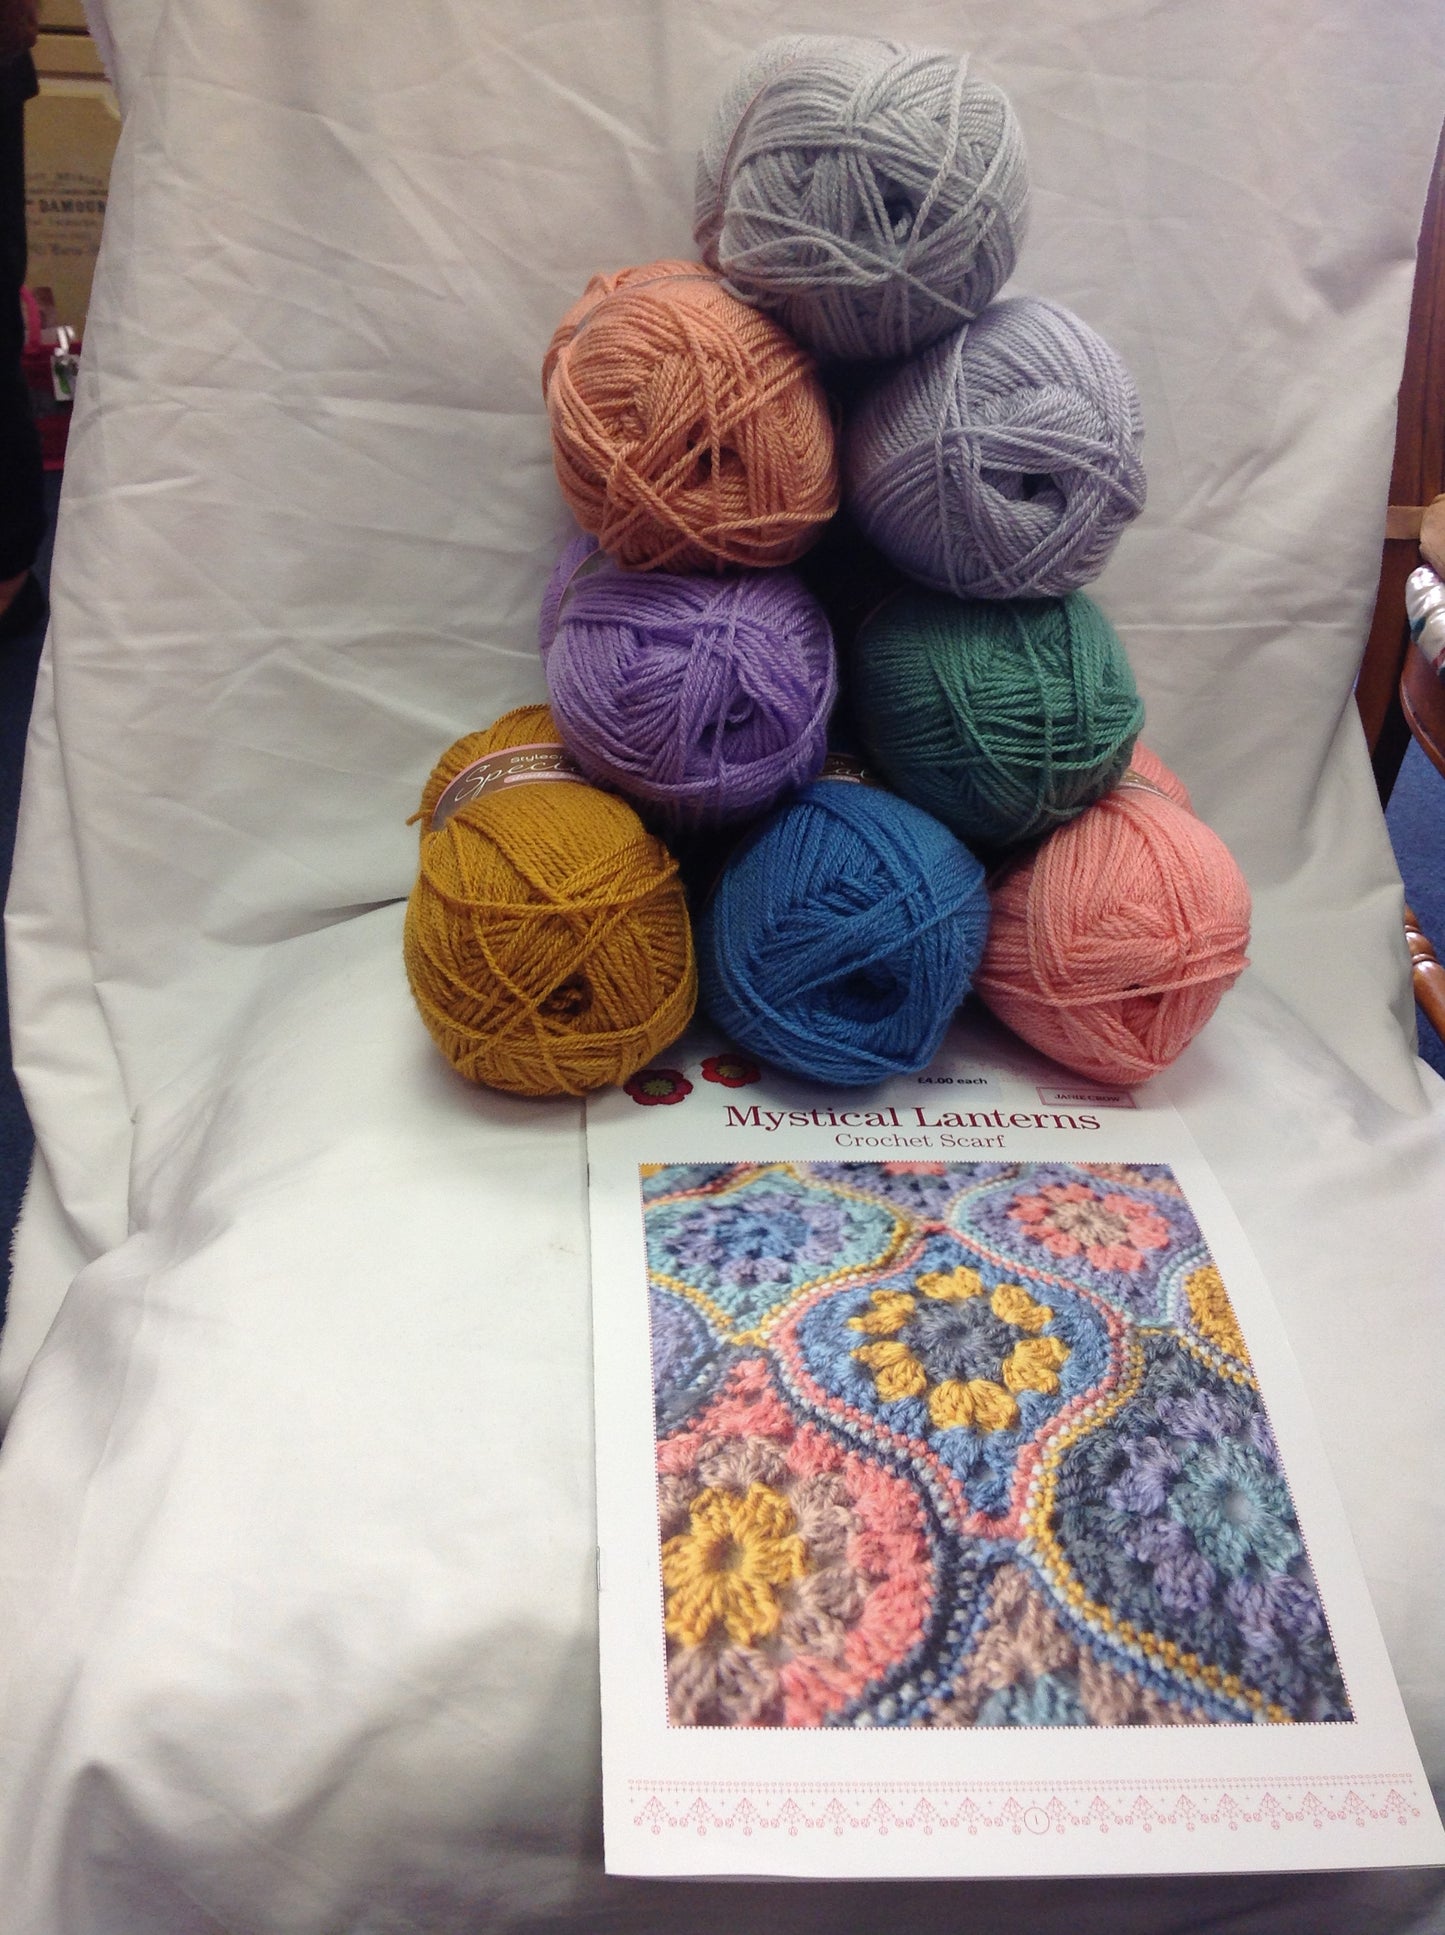 Mystical Lanterns Crochet Shawl pack